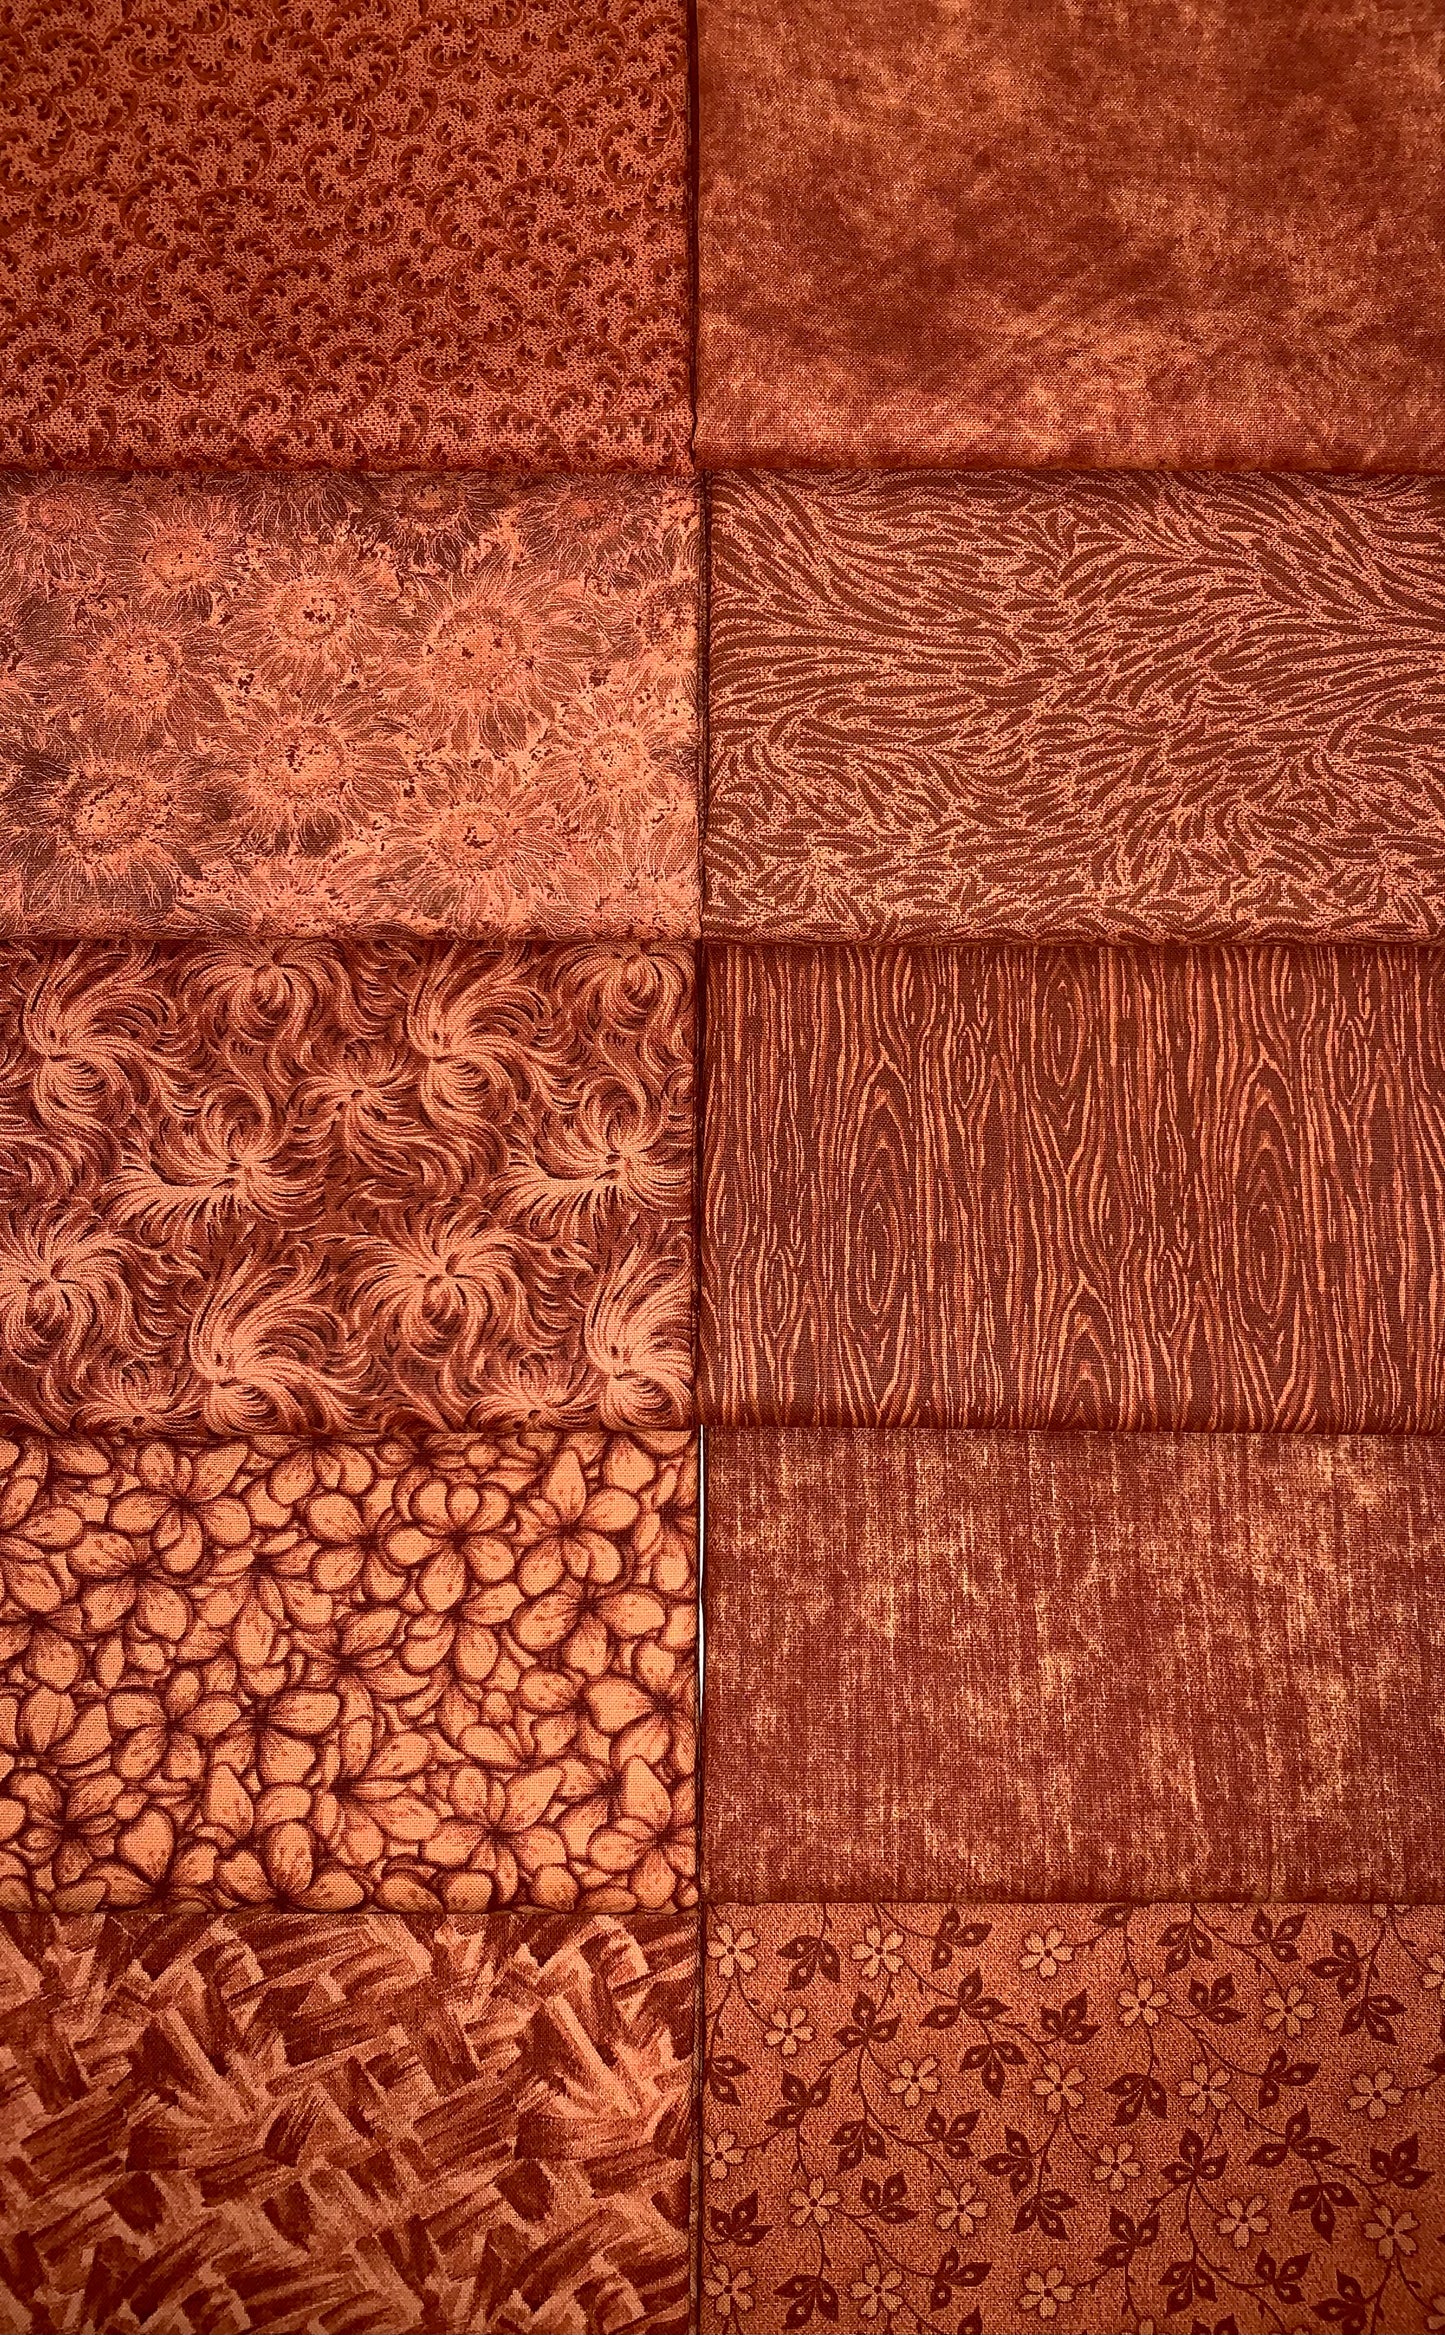 Basic Colors - Cinnamon Half-yard Bundle - 10 Fabrics, 5 Total Yards